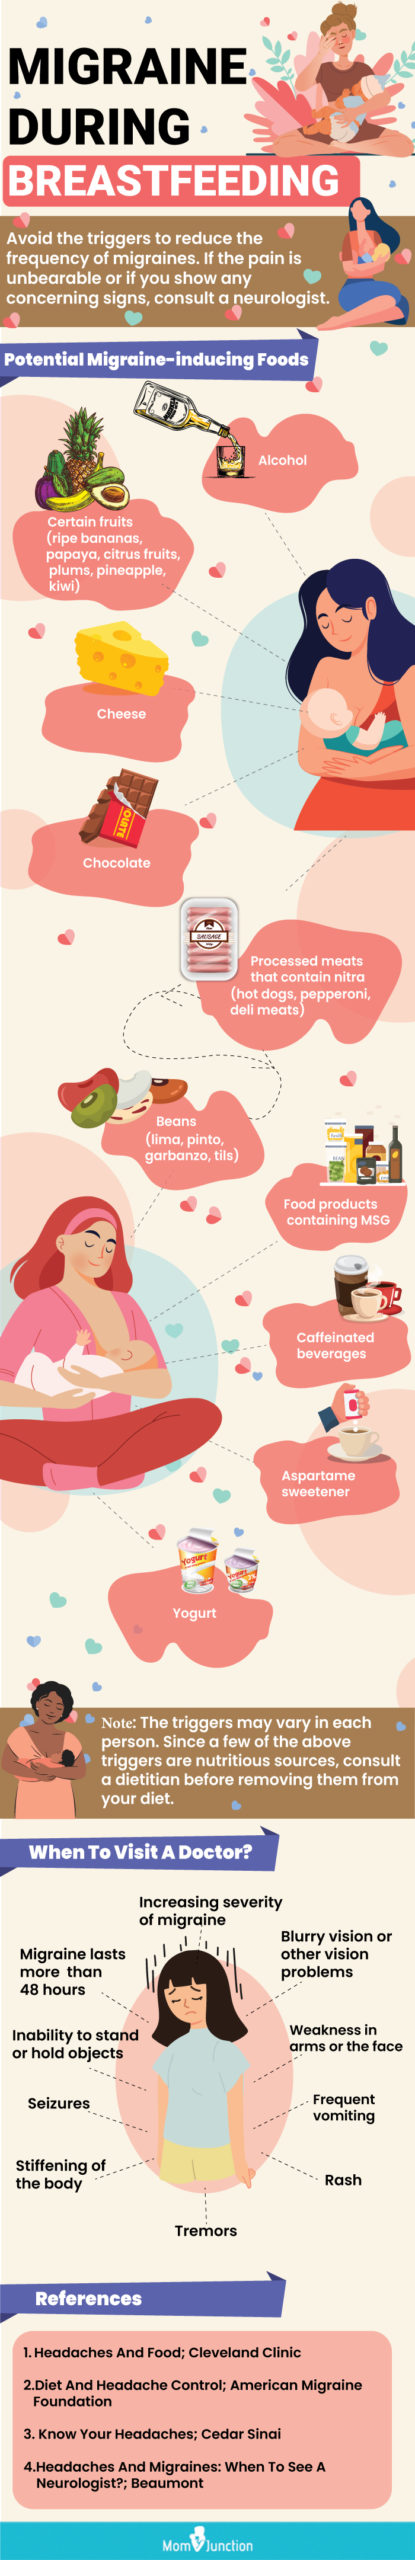 migraine during breastfeeding [infographic]